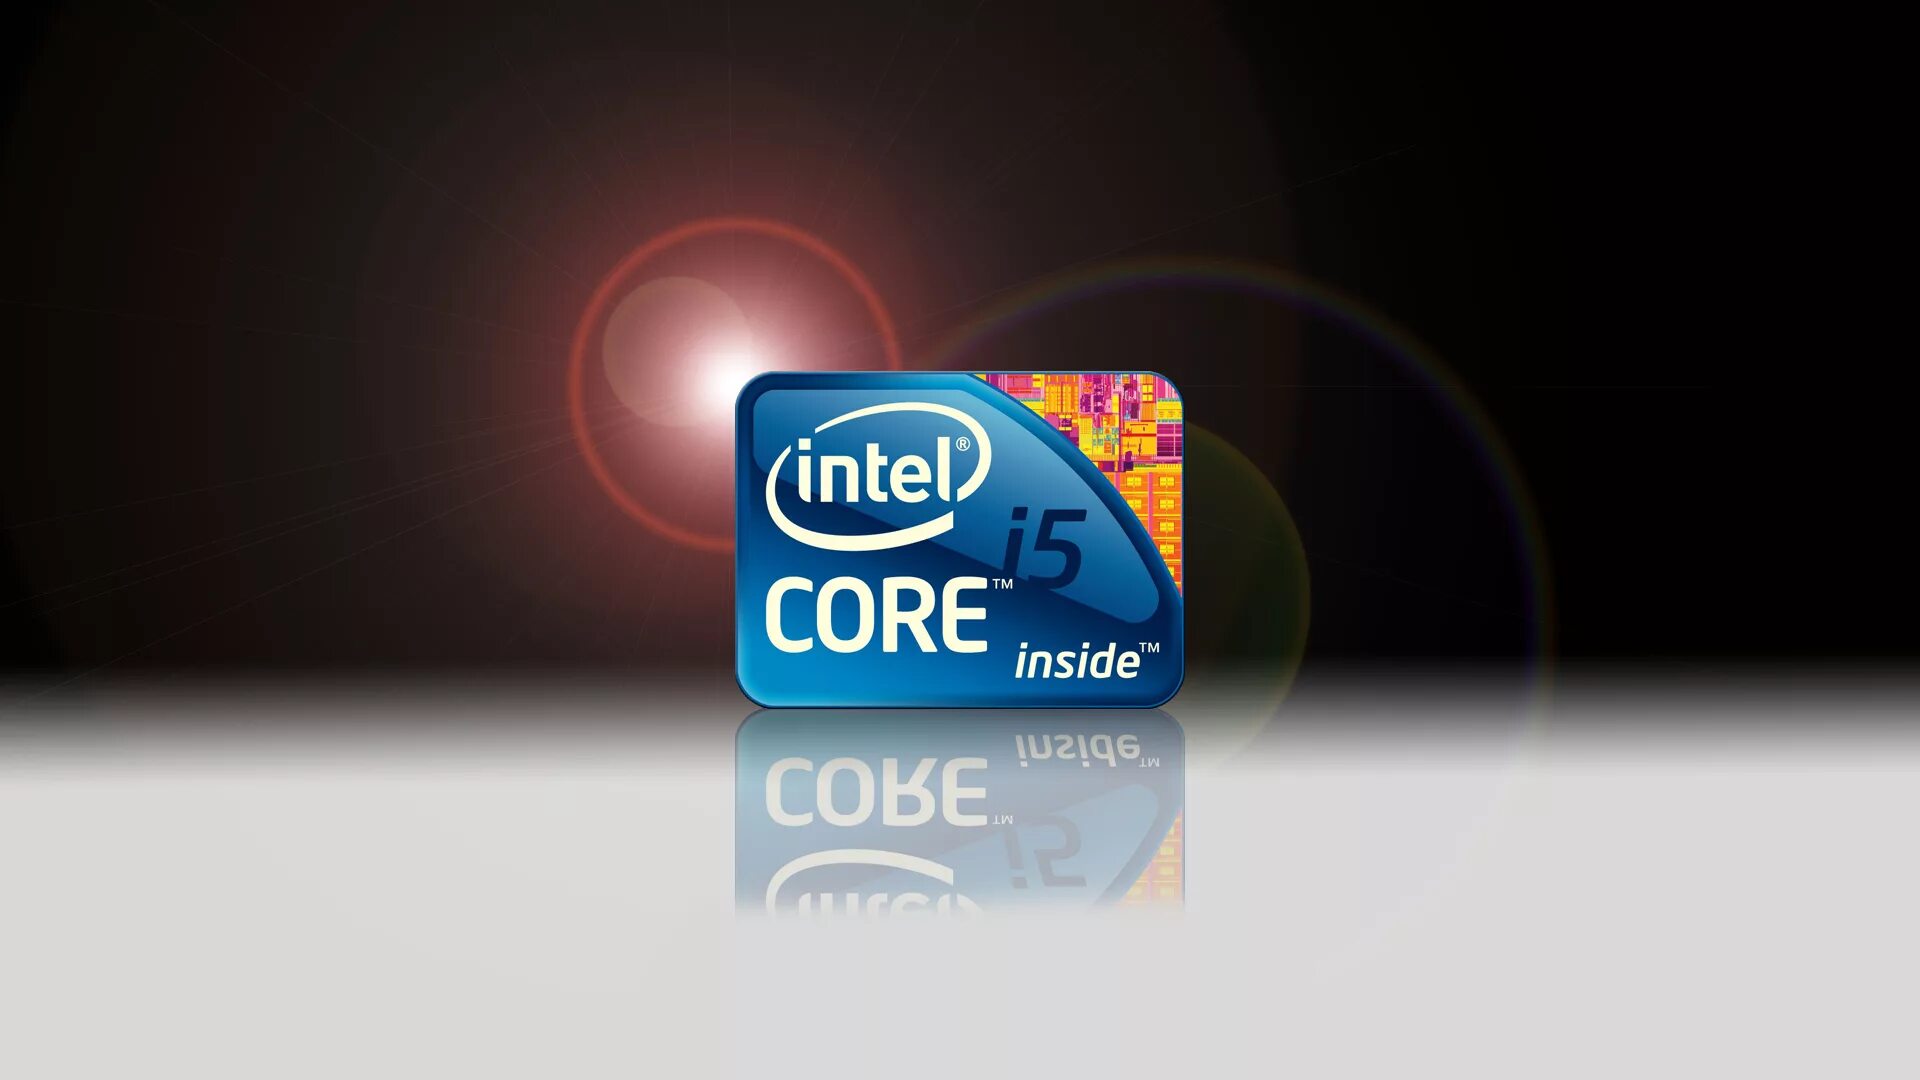 Intel Core i5 logo. Обои Intel Core i5-4590t. Intel Core i5 inside. Интел коре 4